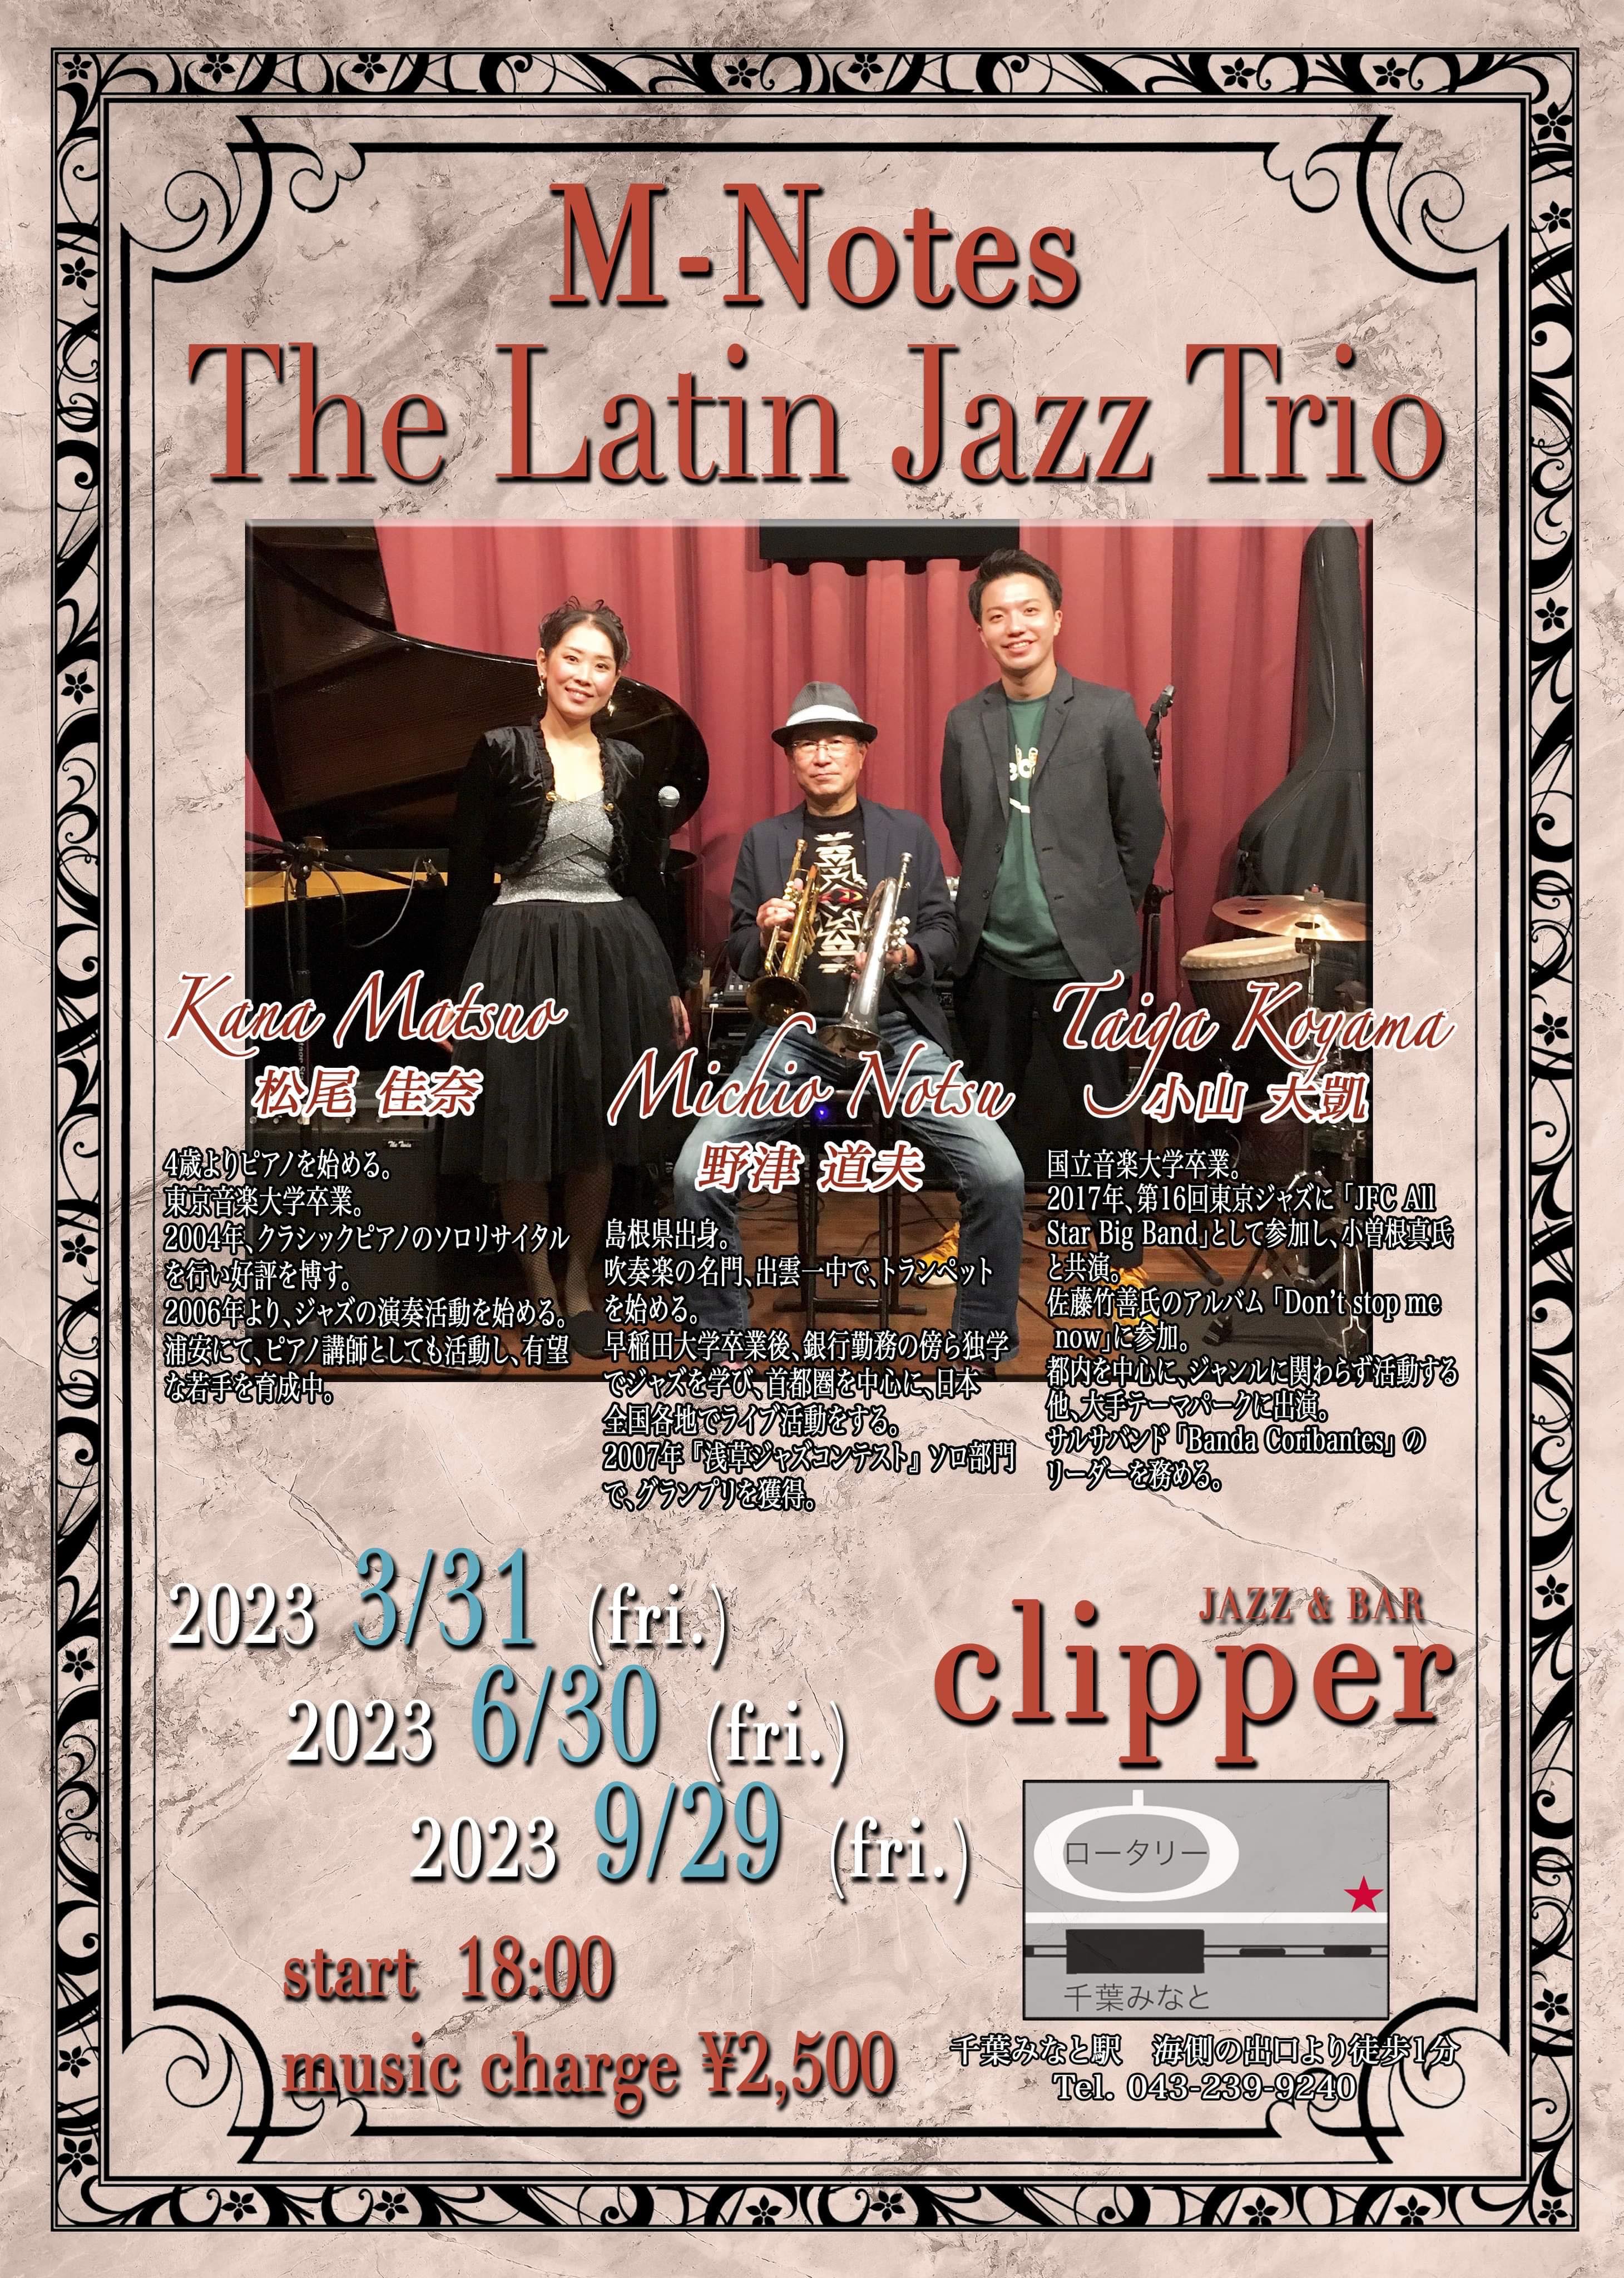 M-Notes The Latin Jazz Trio 